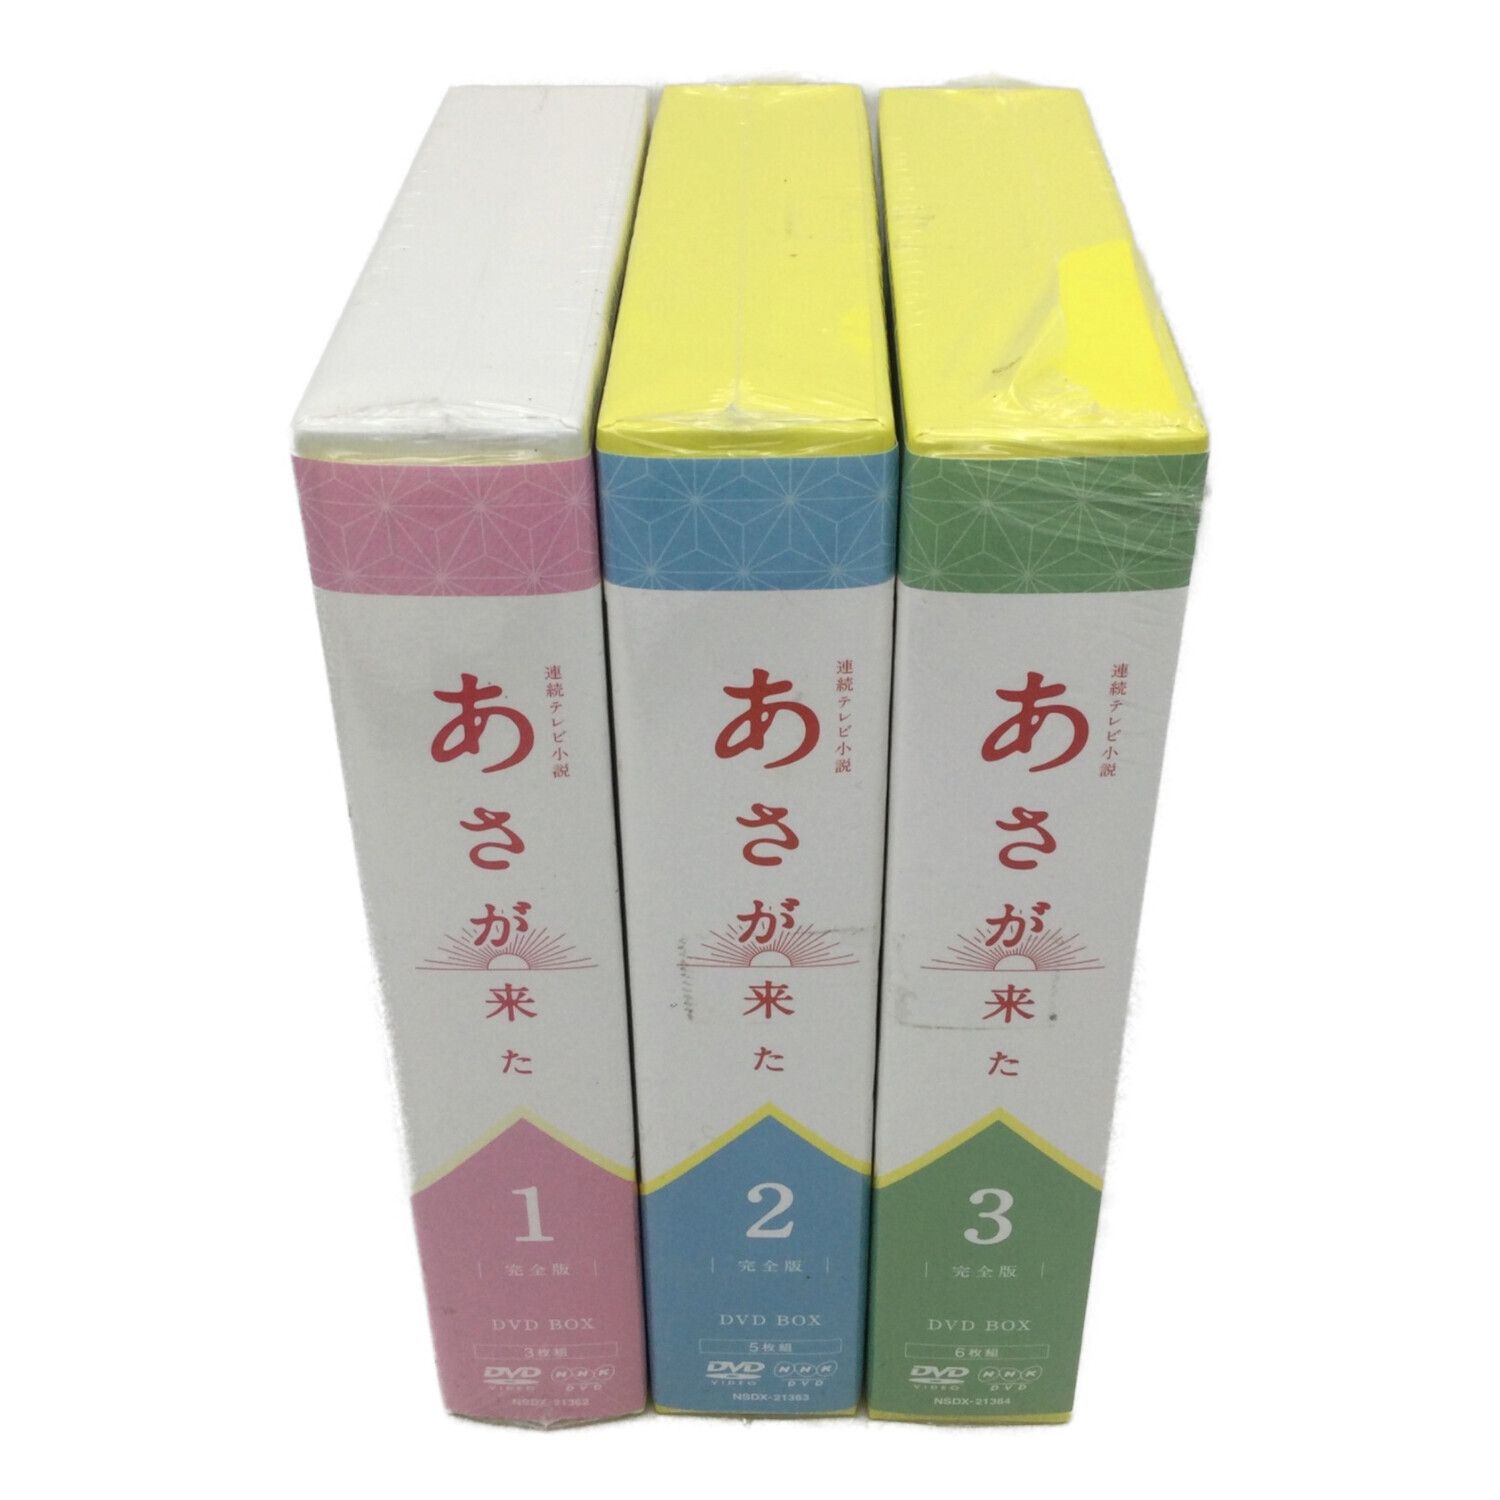 NHK 連続テレビ小説 あさが来た 完全版 DVD-BOX 全3巻セット